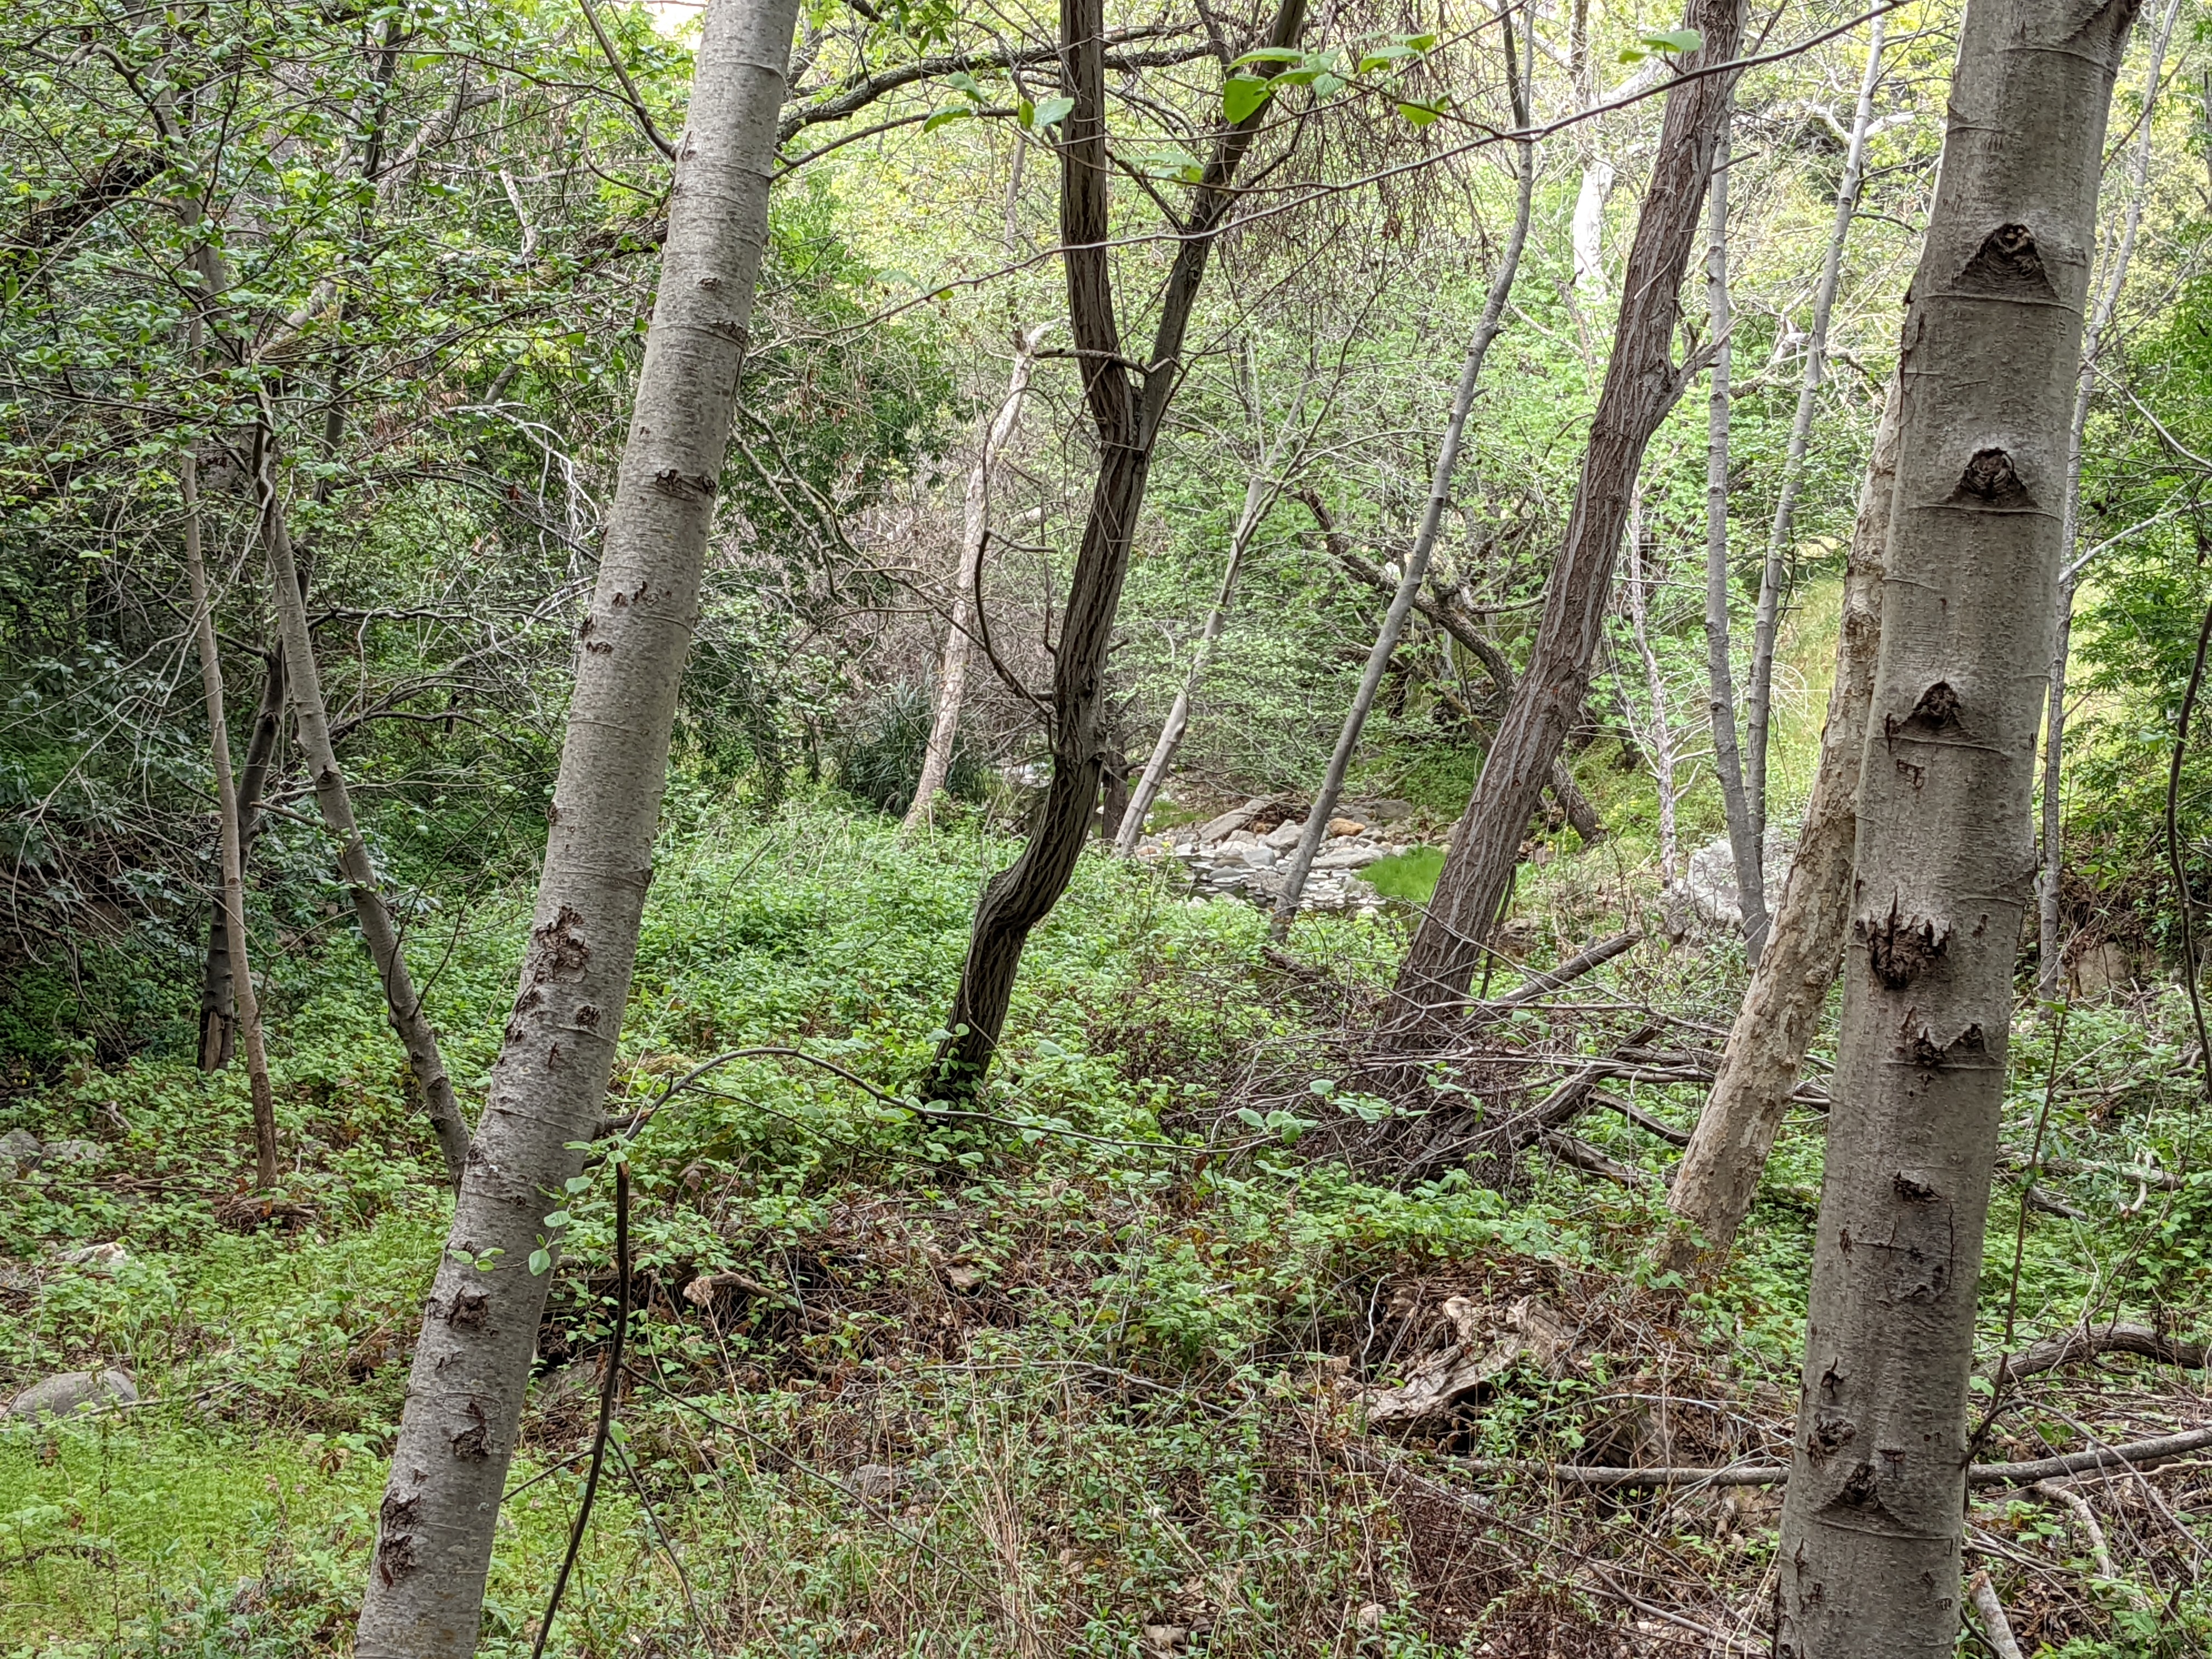 Forest scene by Penitencia Creek